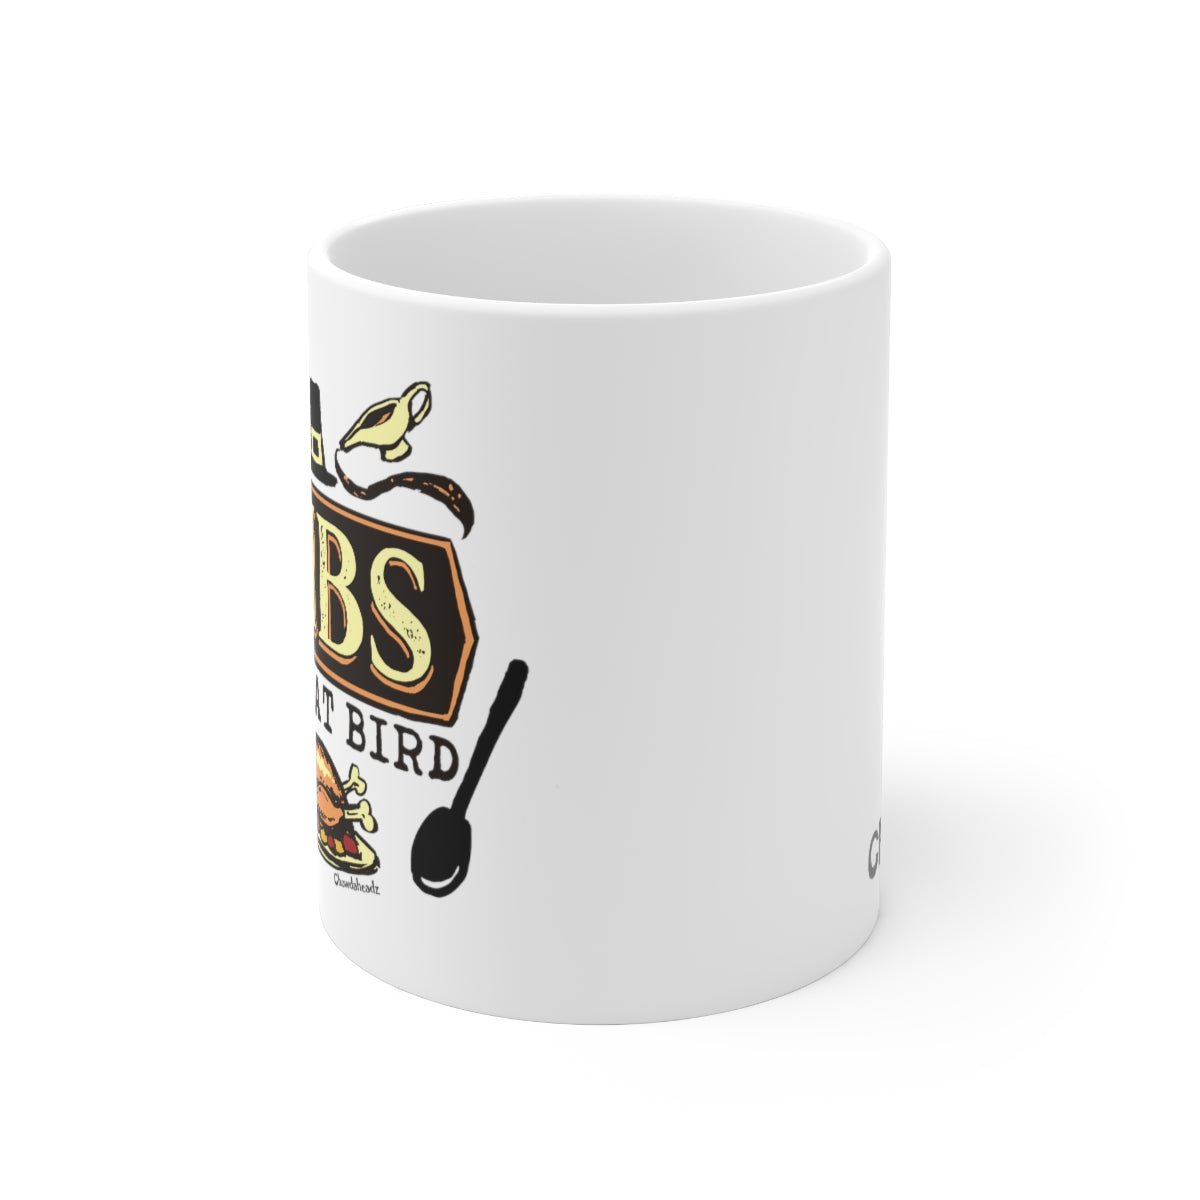 DIBS 11oz Coffee Mug - Chowdaheadz